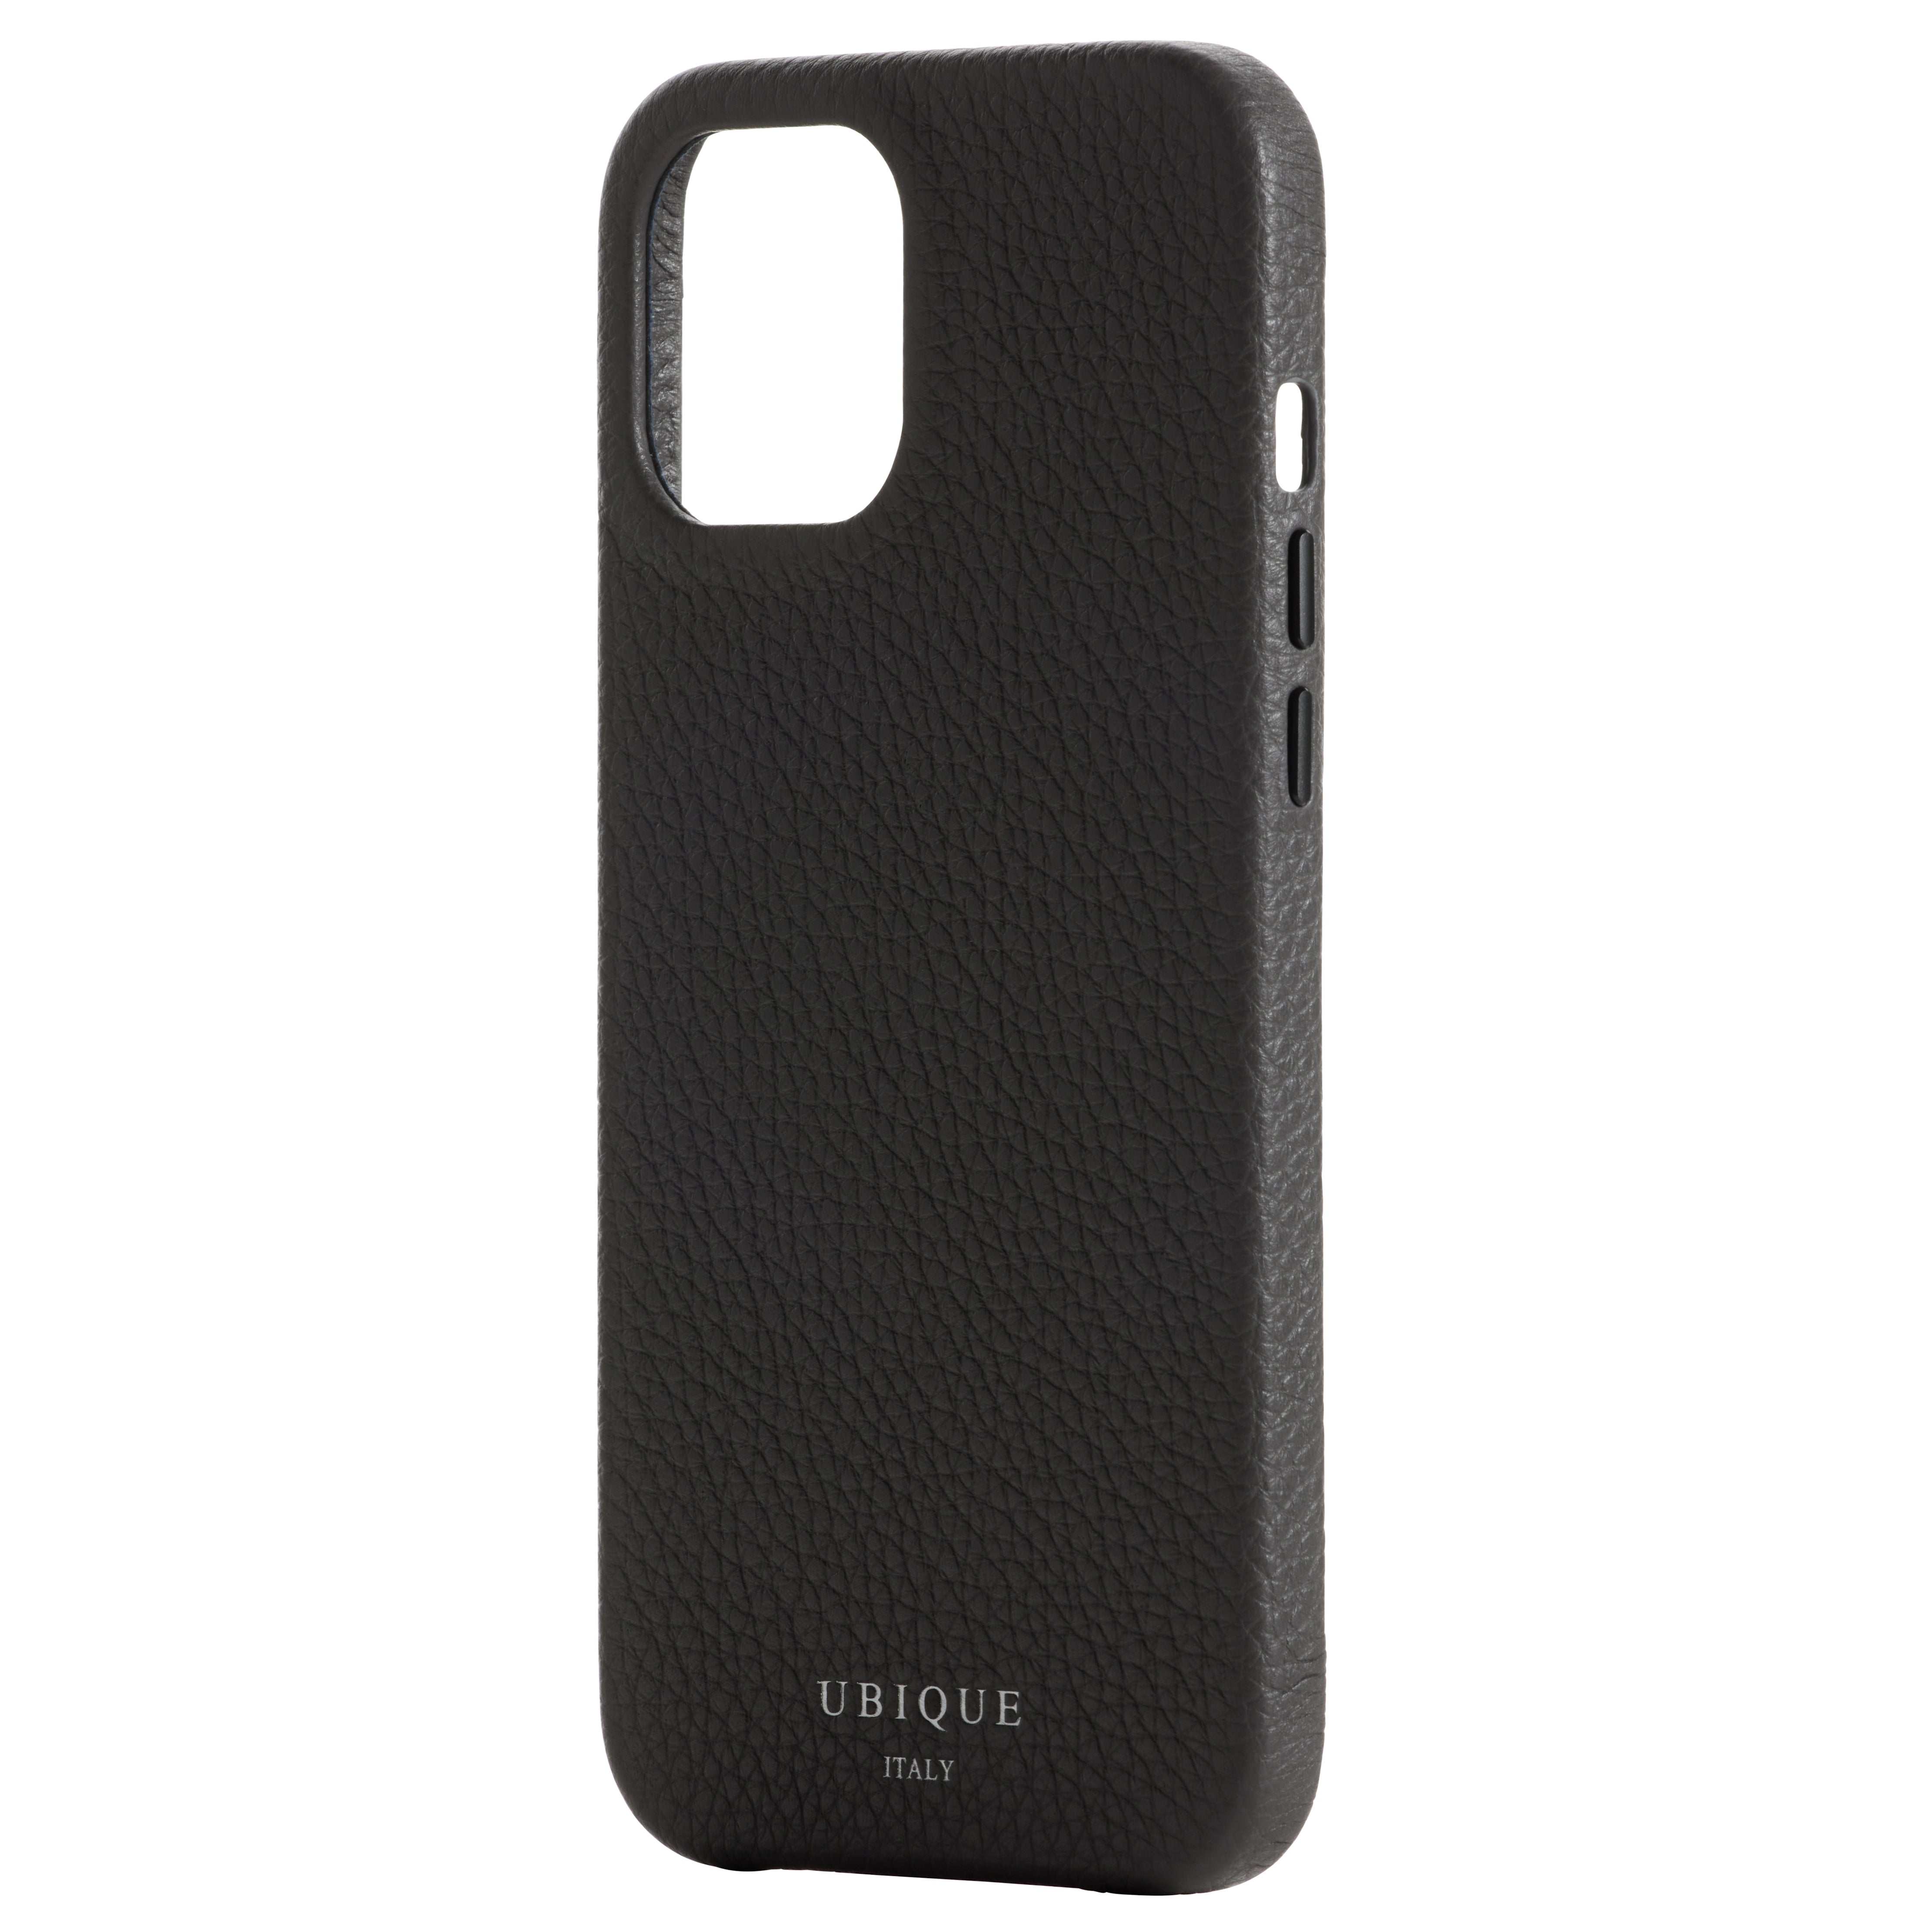 Ubique Italy Luxury iPhone Case 12 Pro Max Pebble Grain Leather Storm Grey Angled